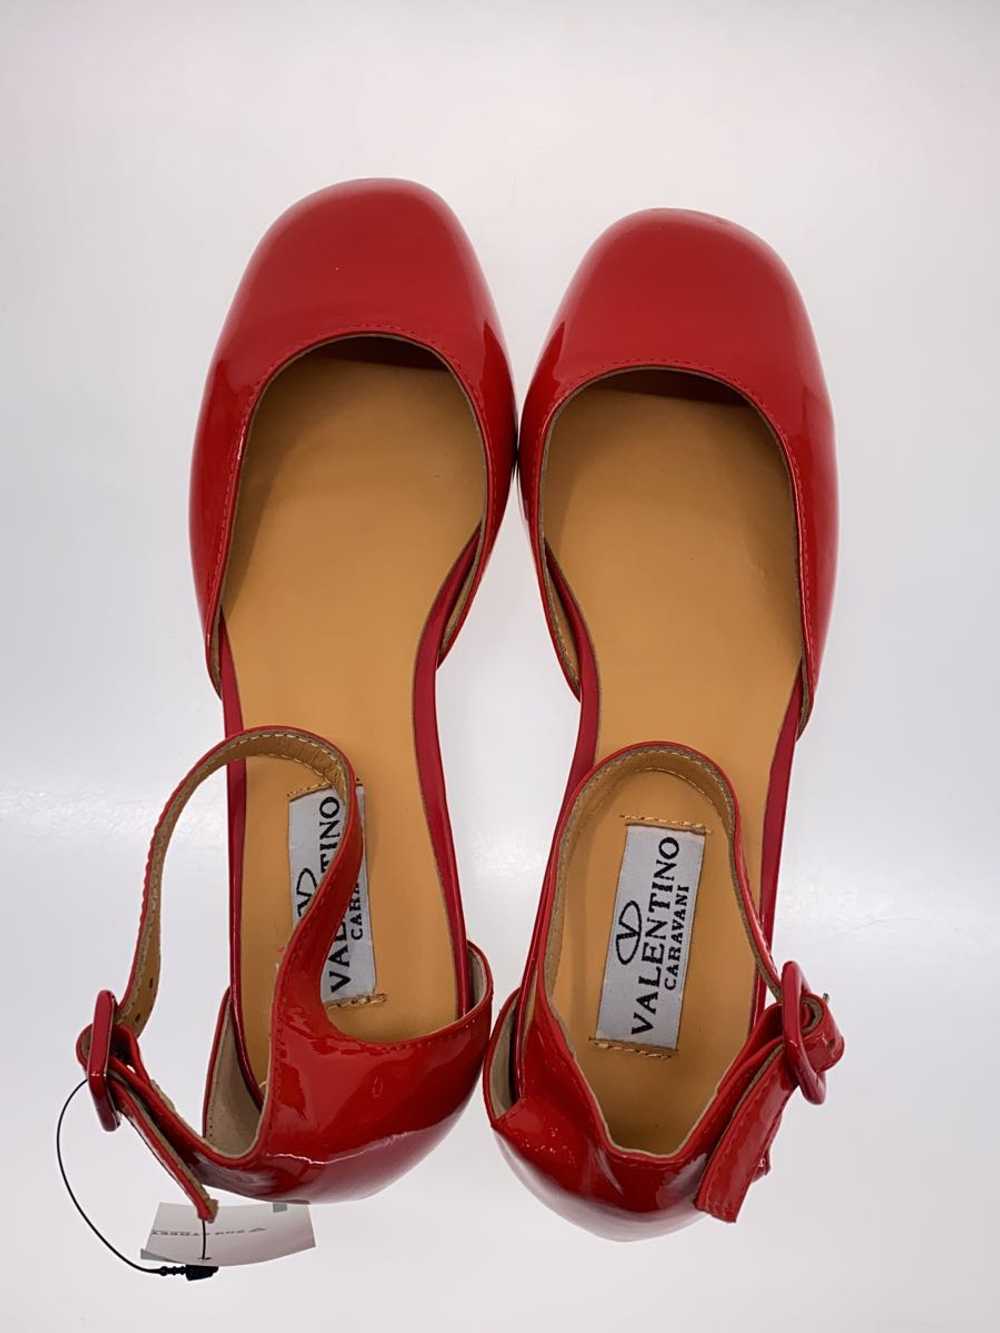 Valentino Garavani Pumps/38/Red/Enamel Shoes BiI84 - image 3